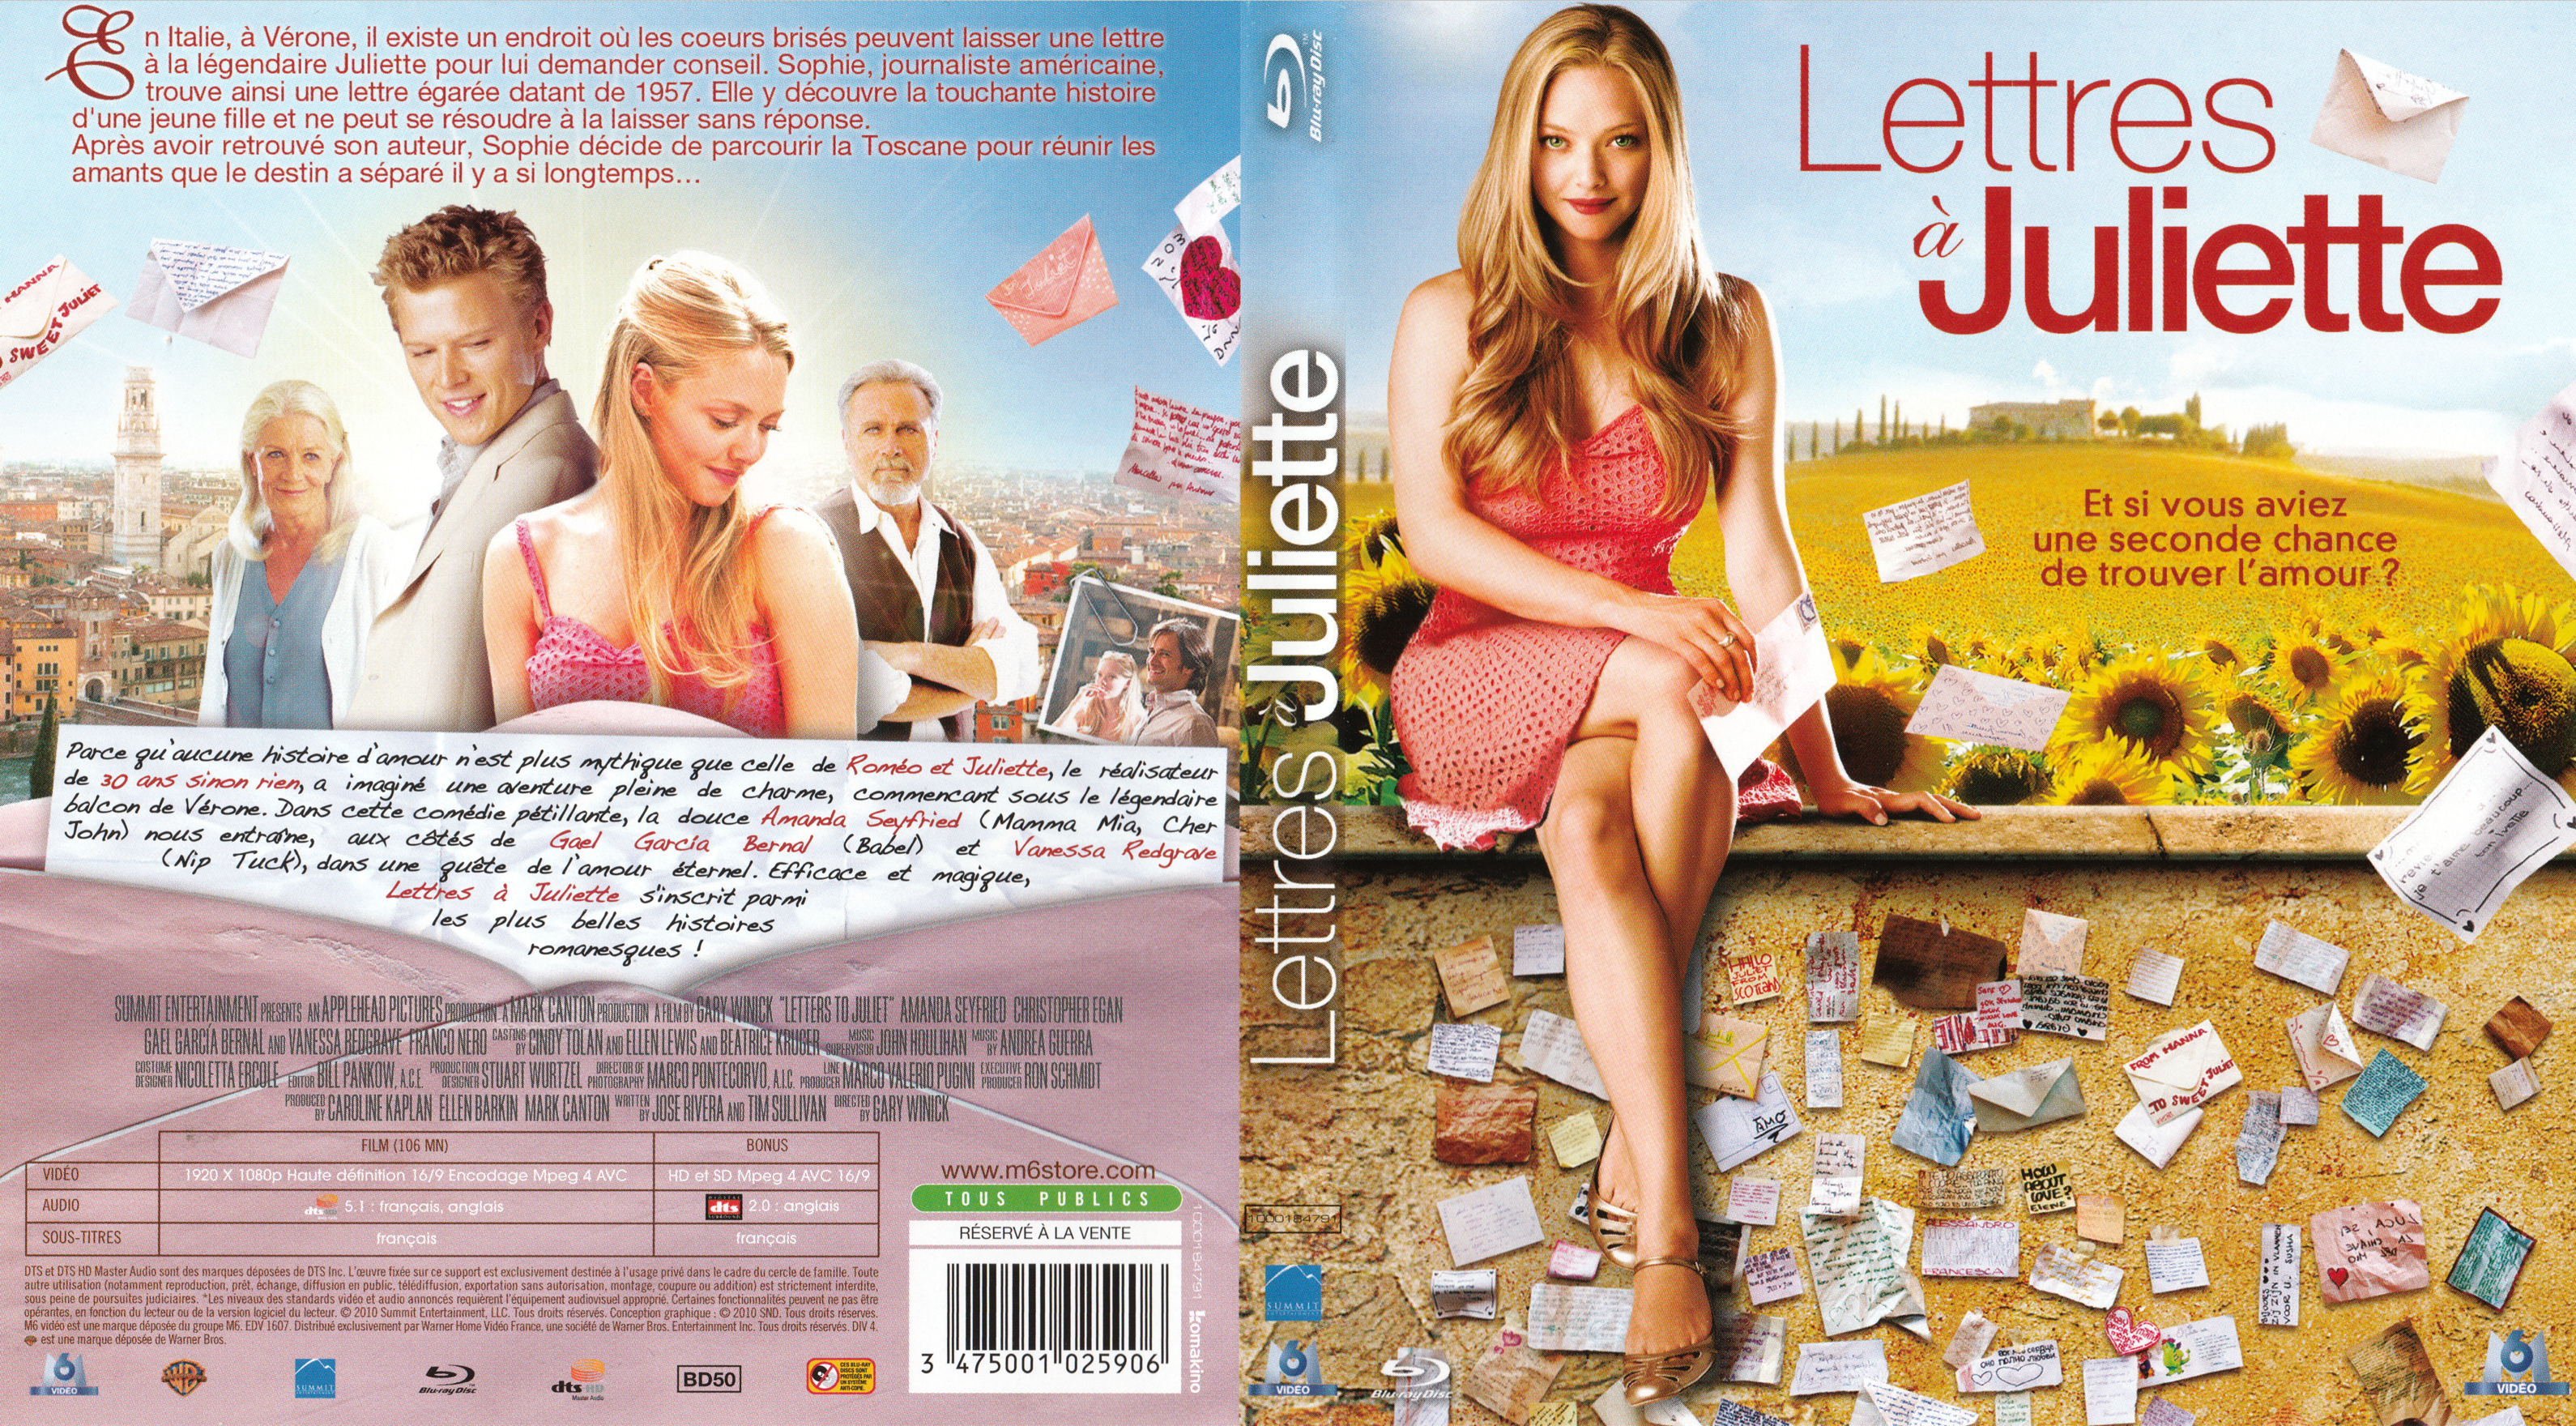 Jaquette DVD Lettres a Juliette (BLU-RAY)